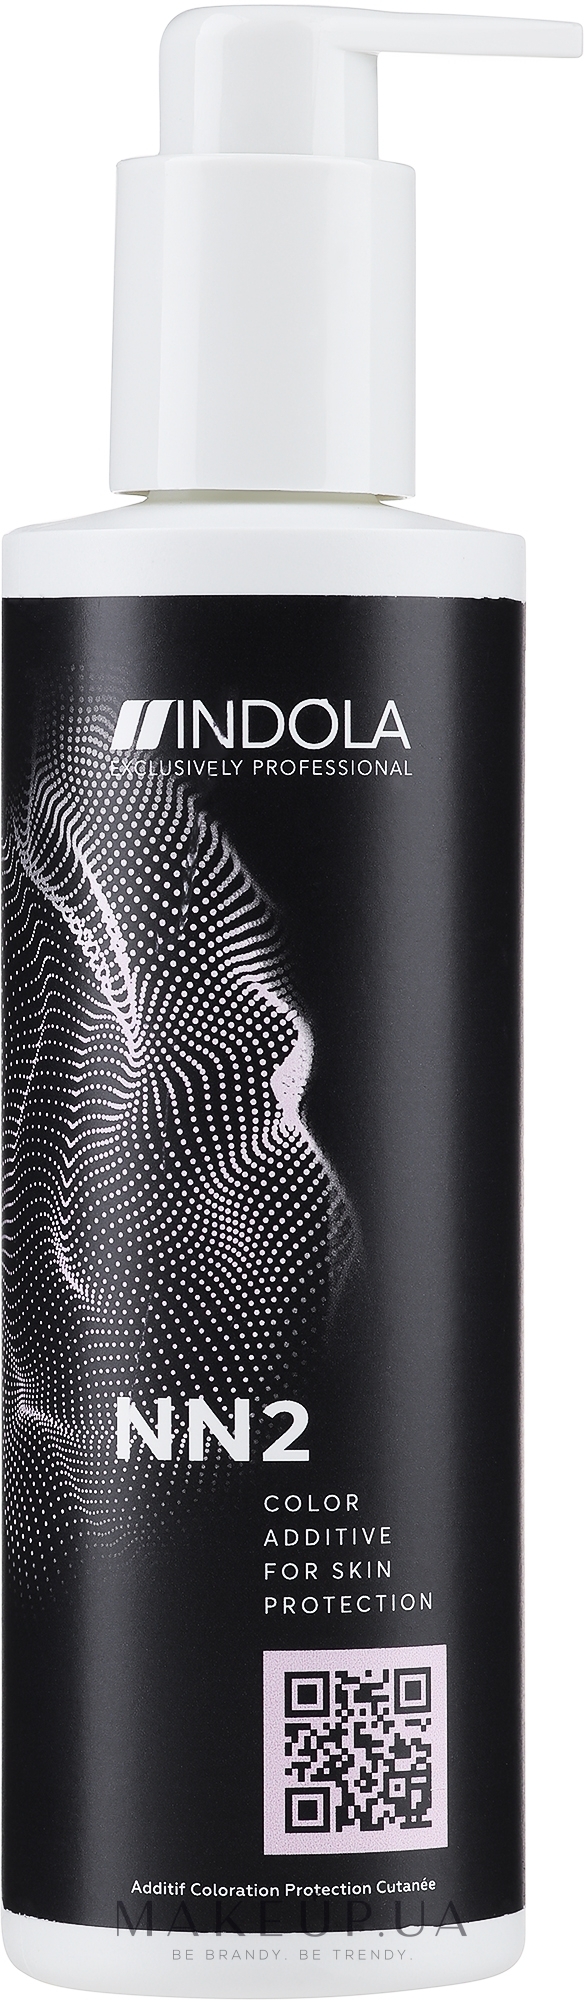 Лосьон для защиты кожи головы при окрашивании - Indola Profession NN2 Color Additive Skin Protector — фото 250ml